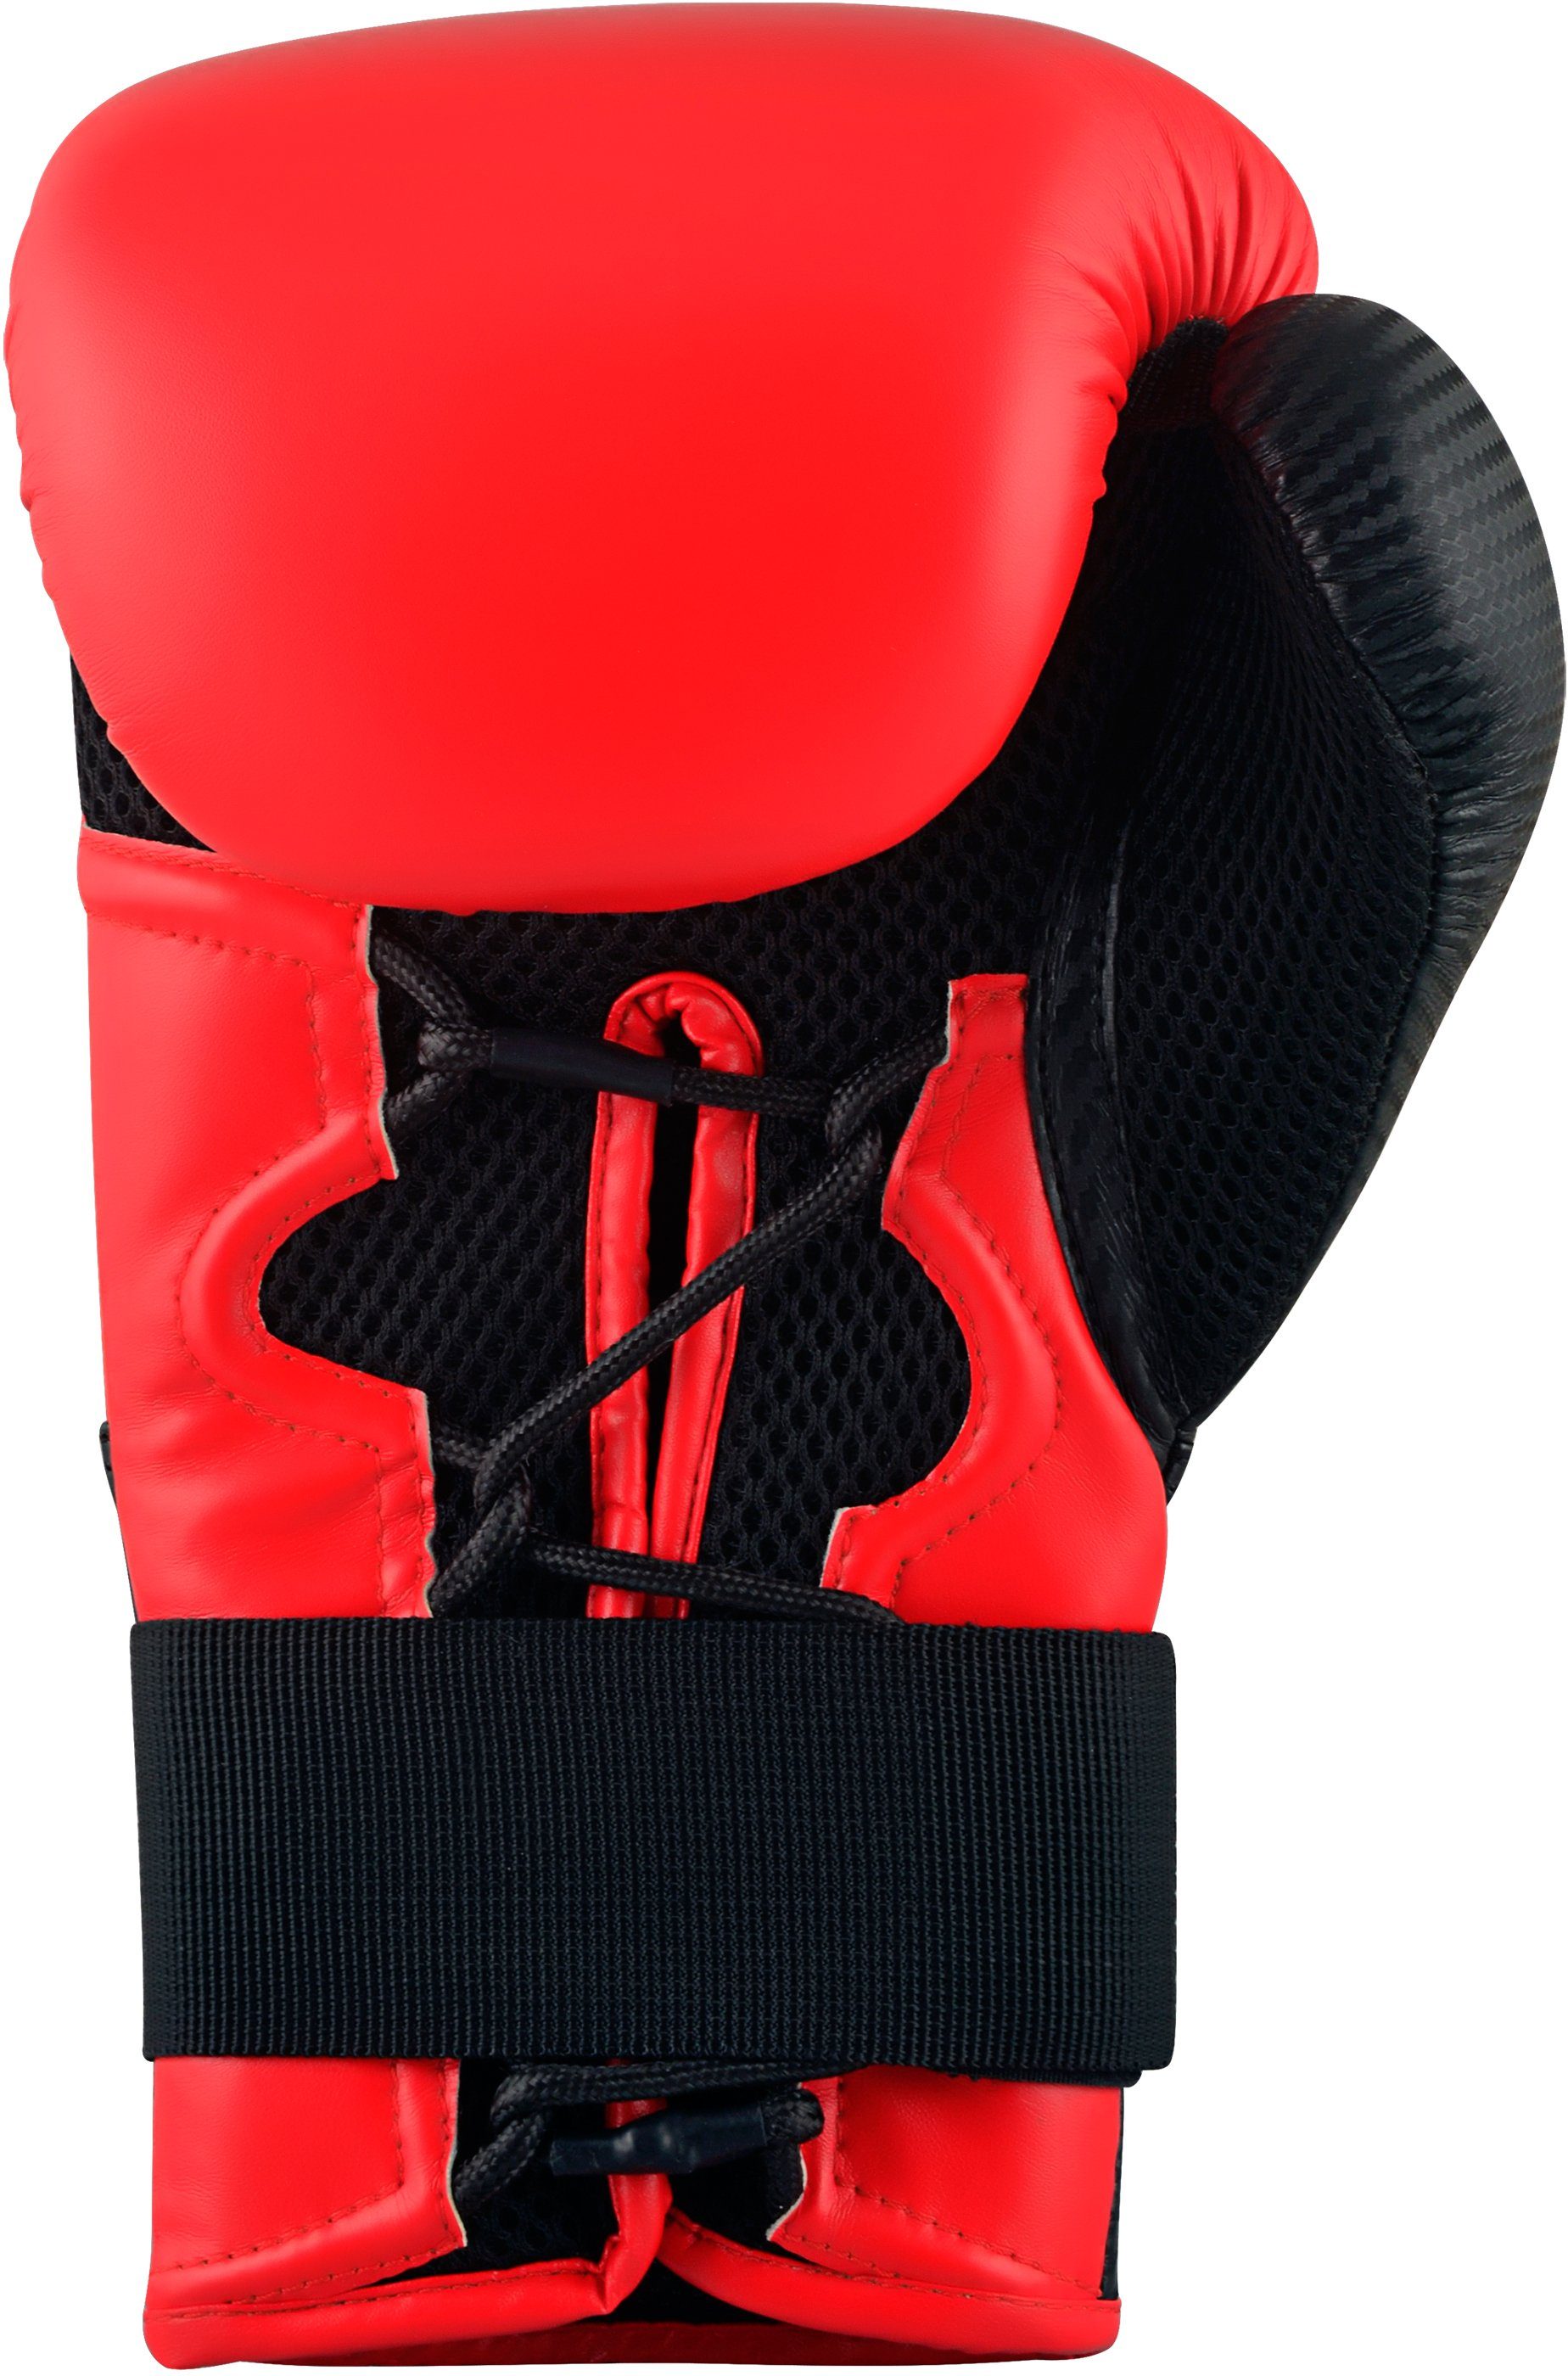 Boxhandschuhe Performance rot/schwarz adidas